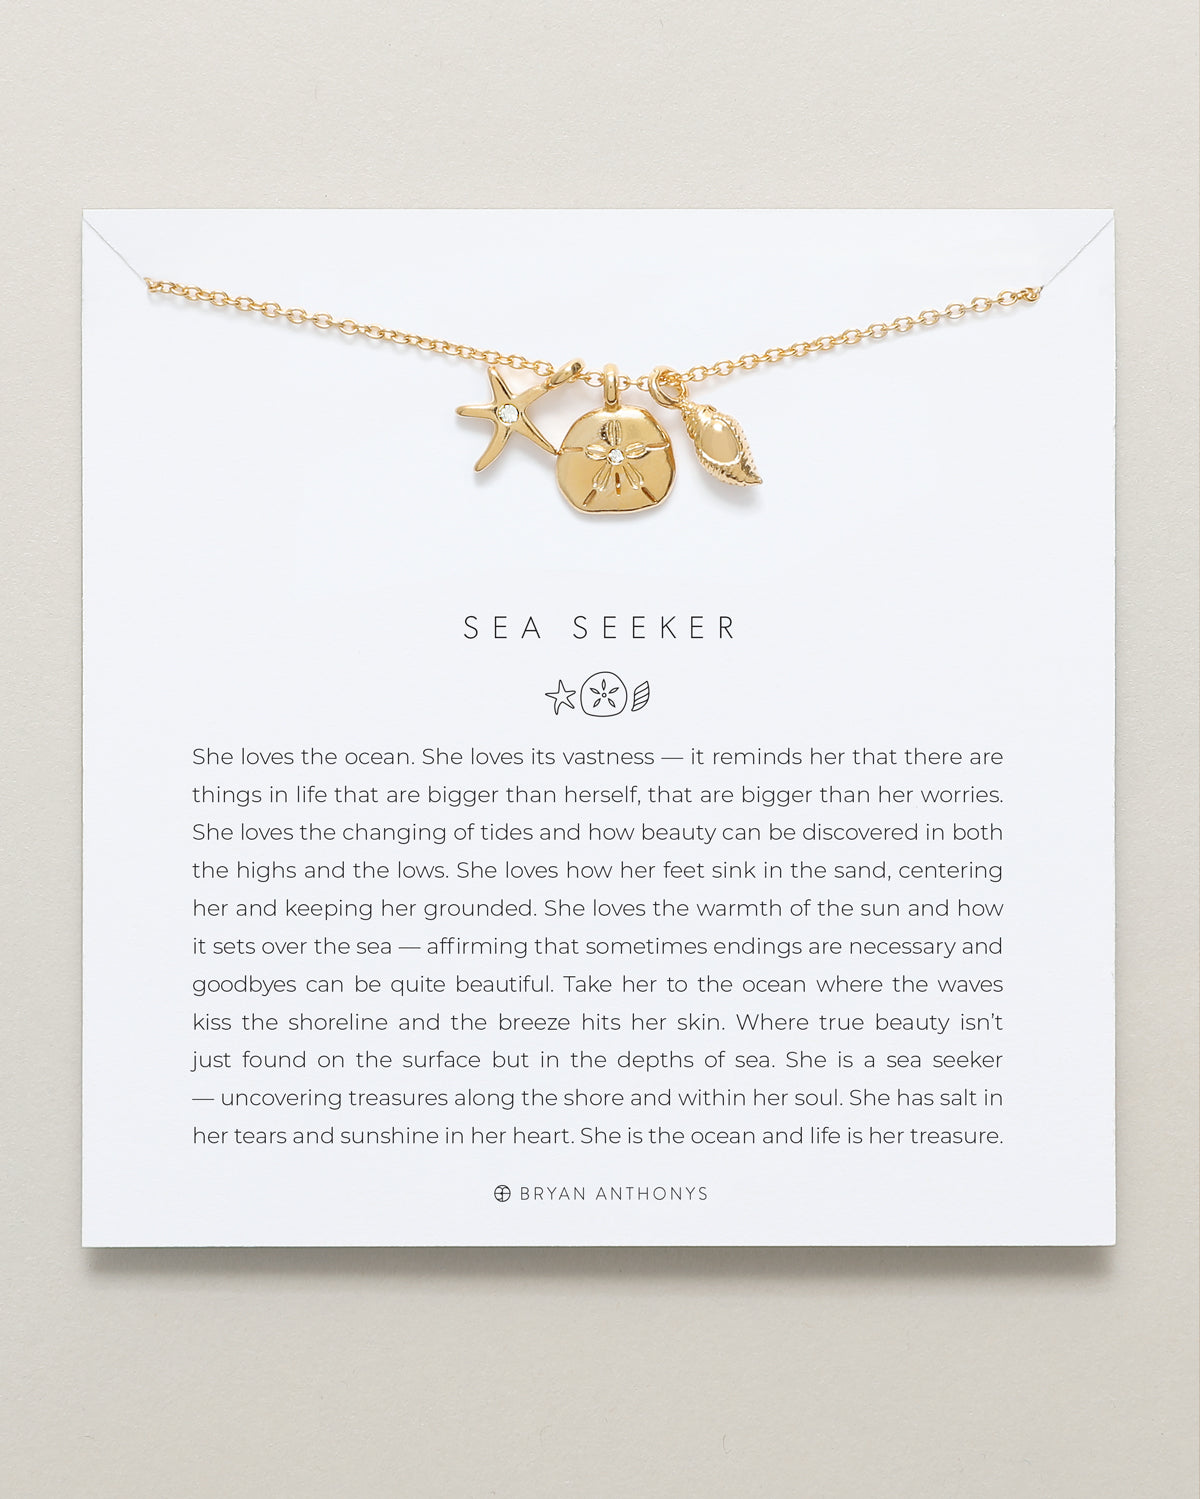 bryan anthonys dainty sea seeker necklace 14k gold